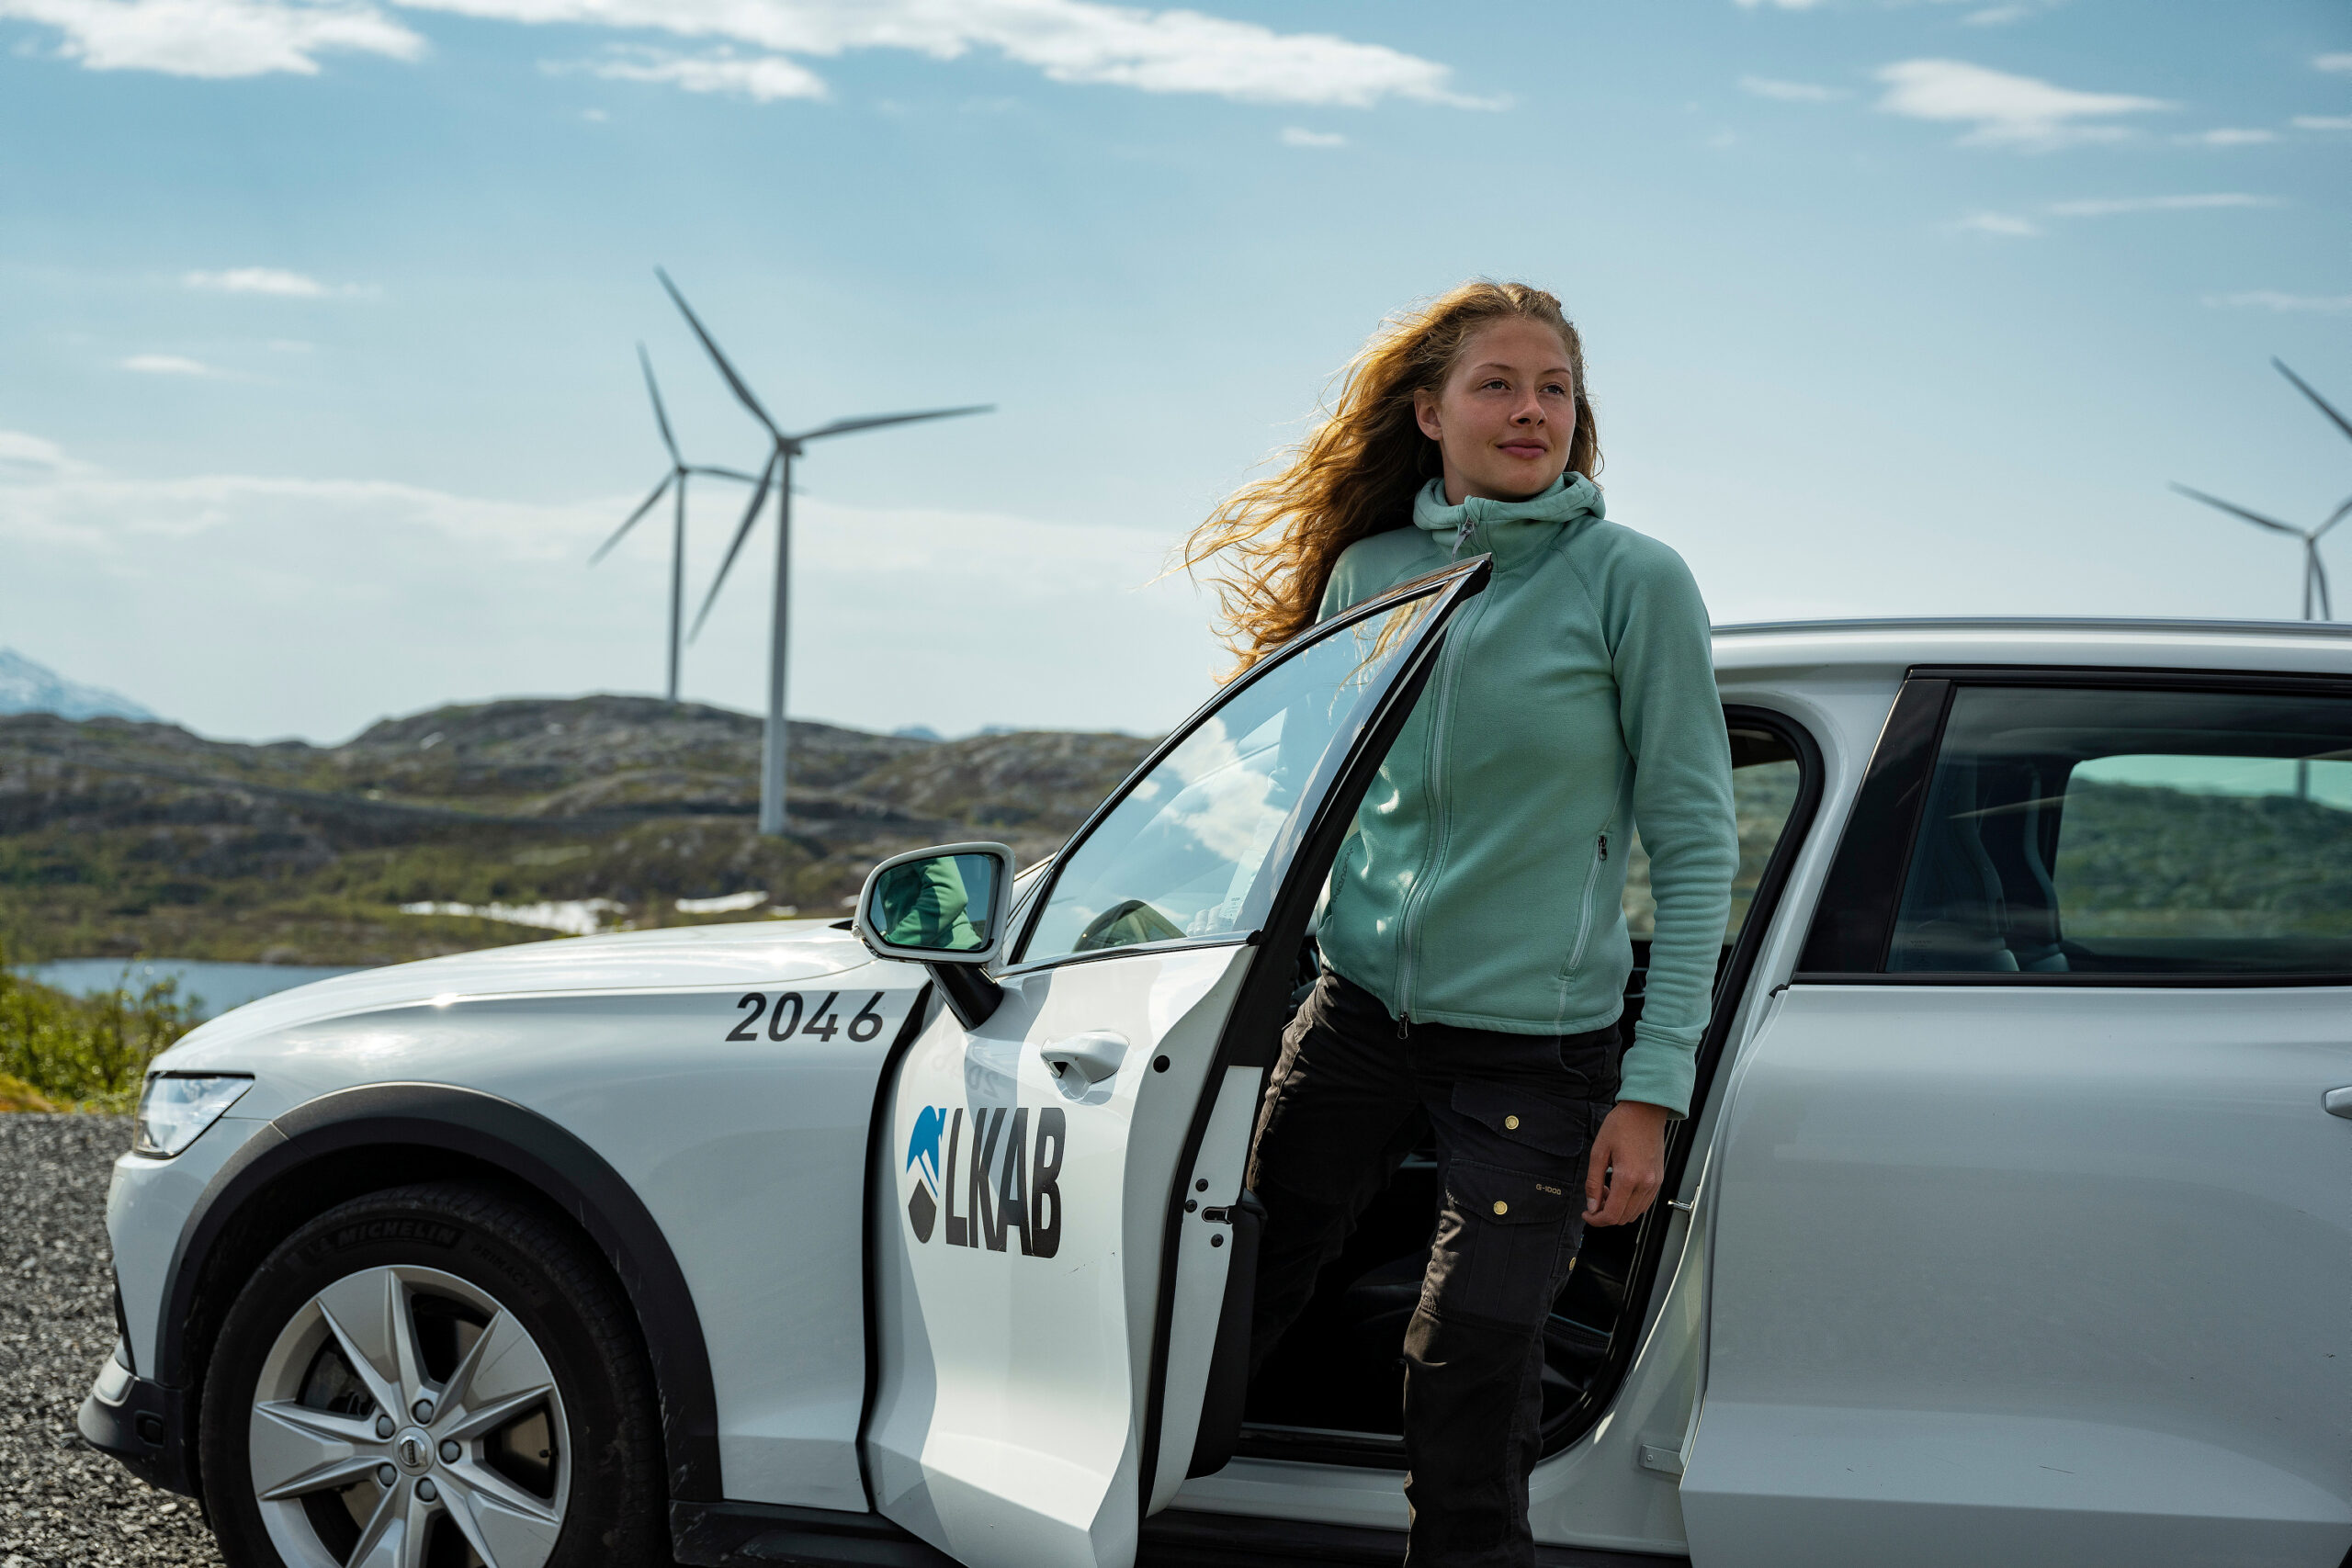 Kvinna kliver ur en bil, med vindkraftverk i bakgrunden